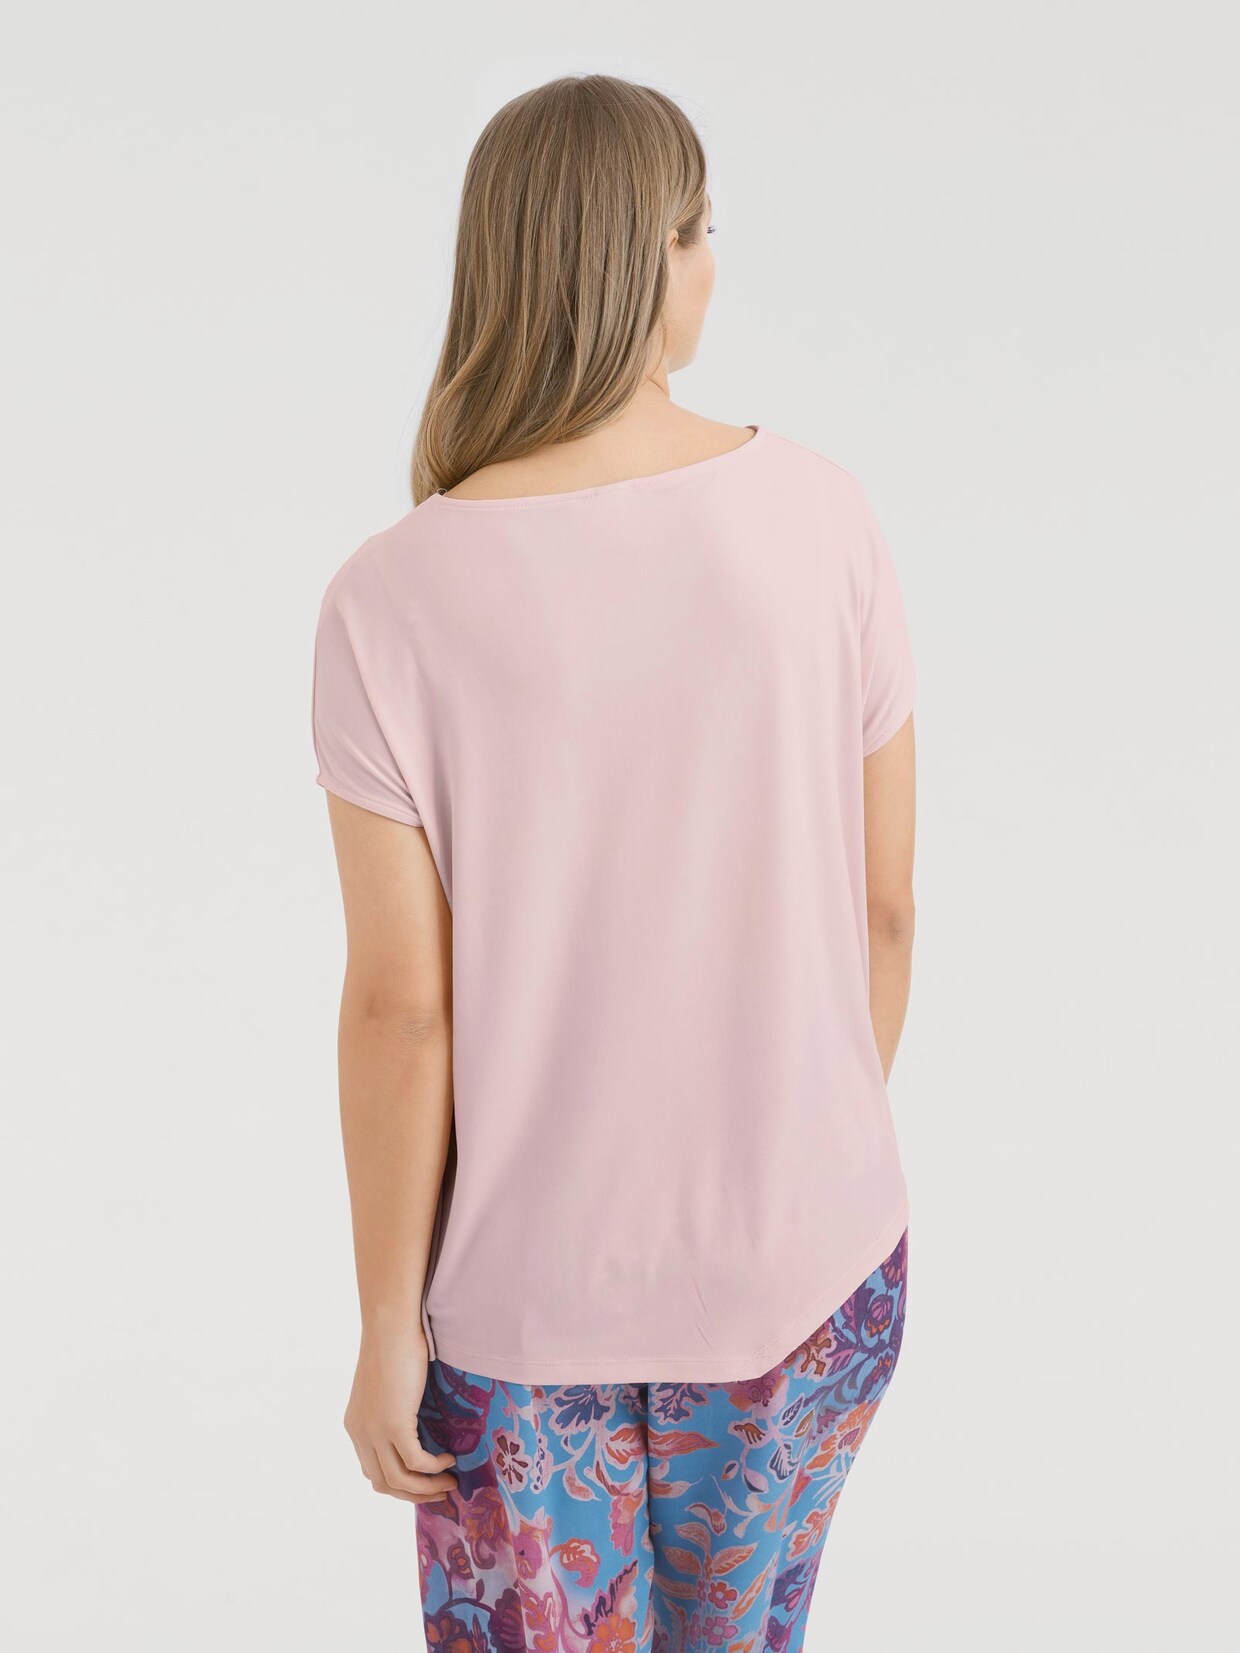 Ashley Brooke Rundhals-Shirts - rosa